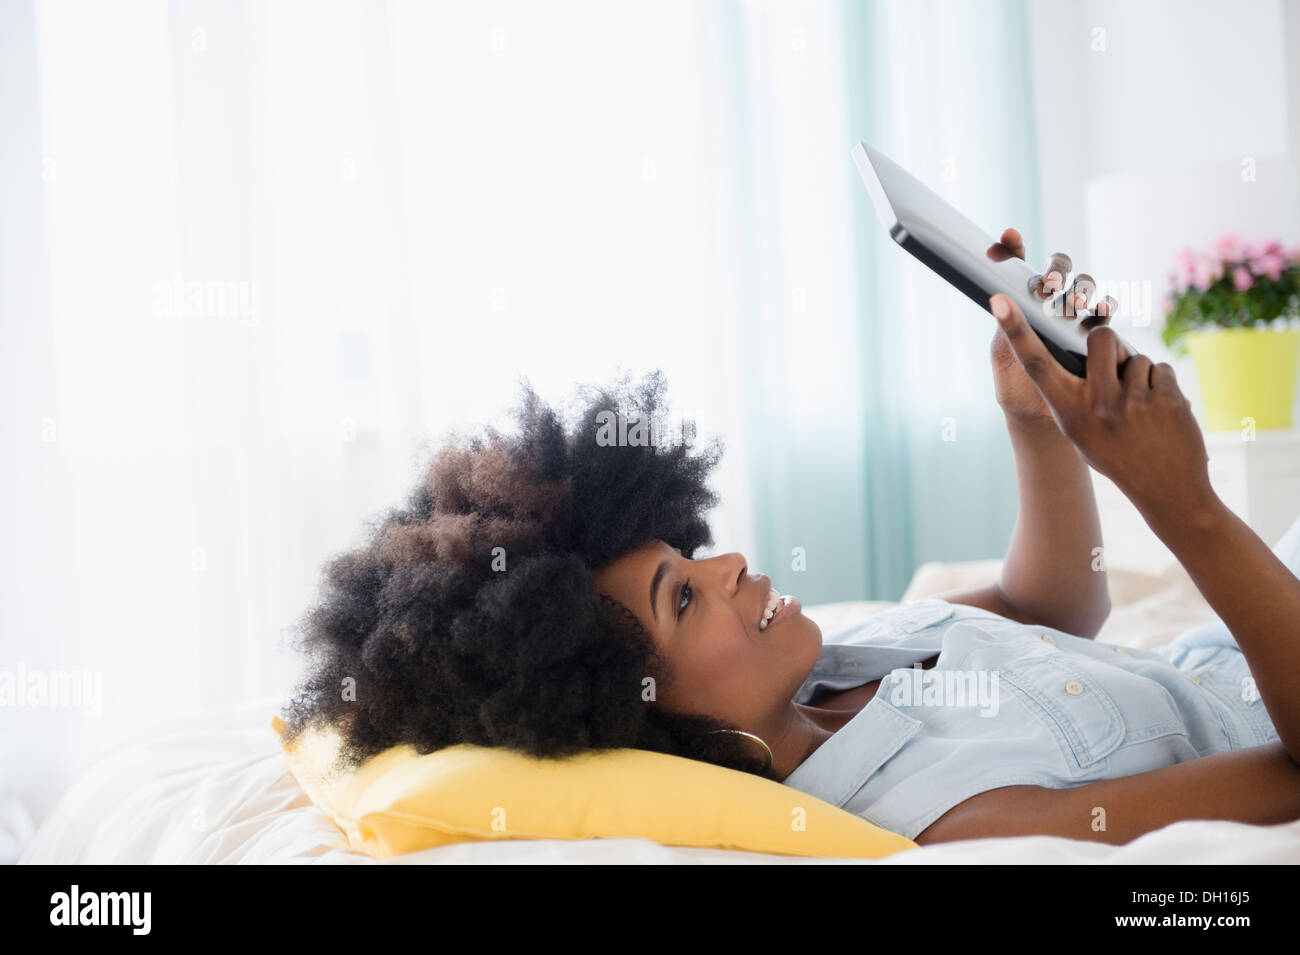 Mixed race woman using digital tablet Stock Photo